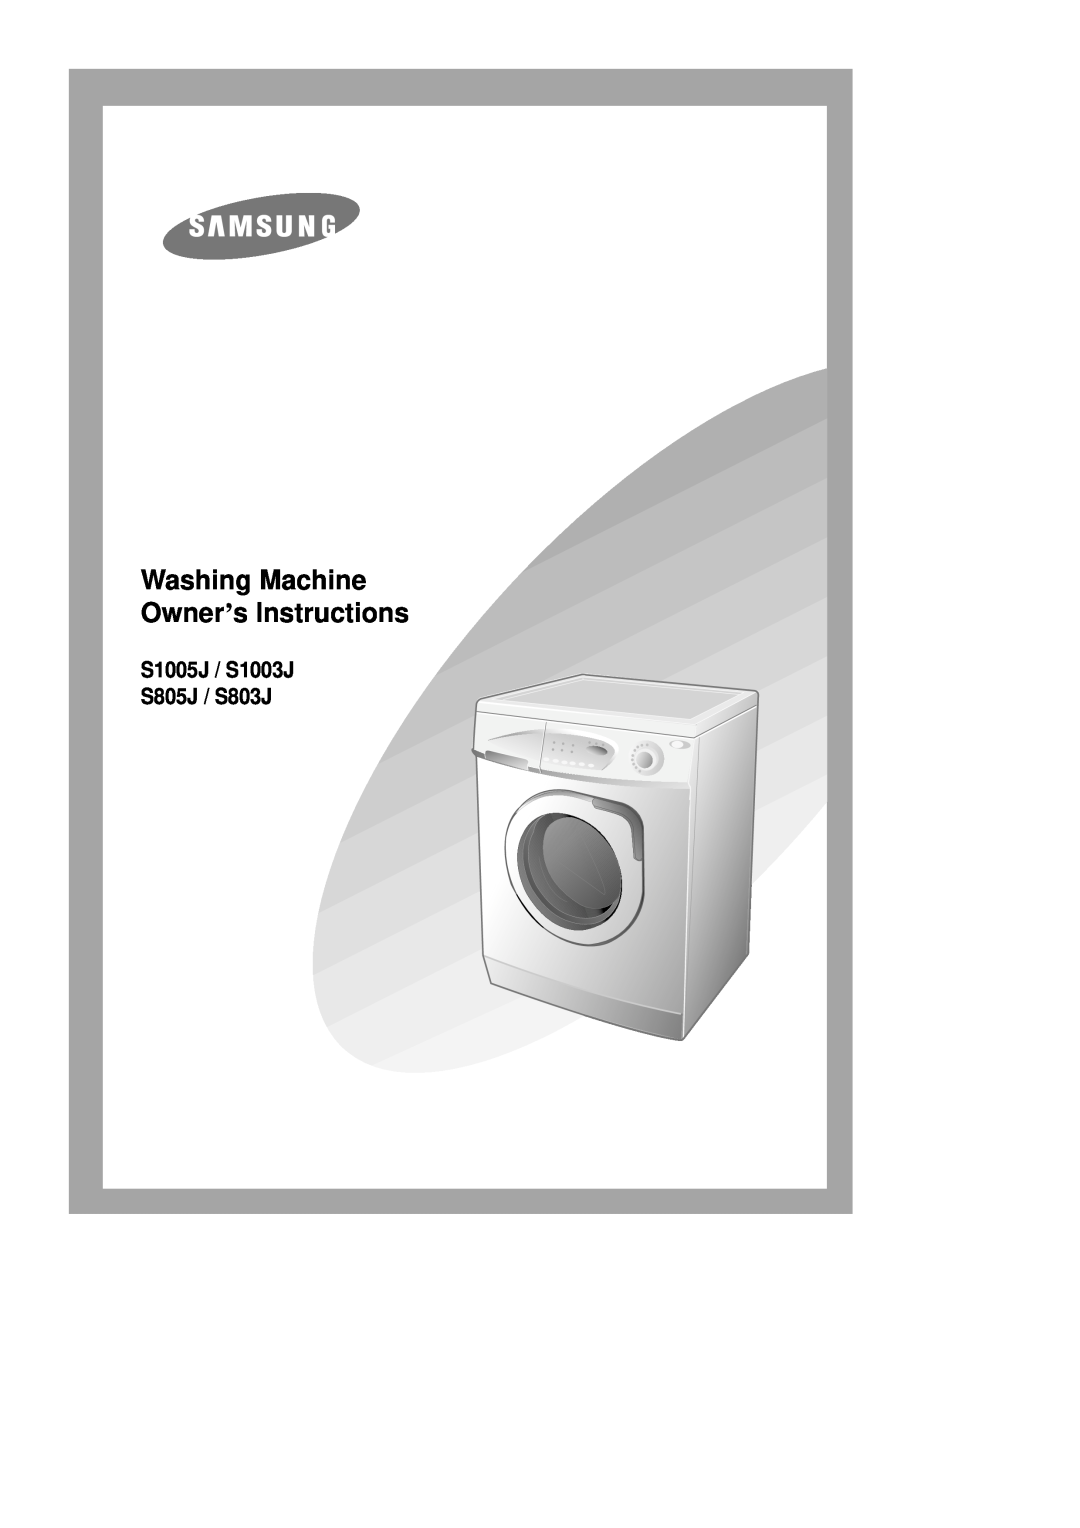 Samsung manual Washing Machine Owner’s Instructions, S1005J / S1003J S805J / S803J 